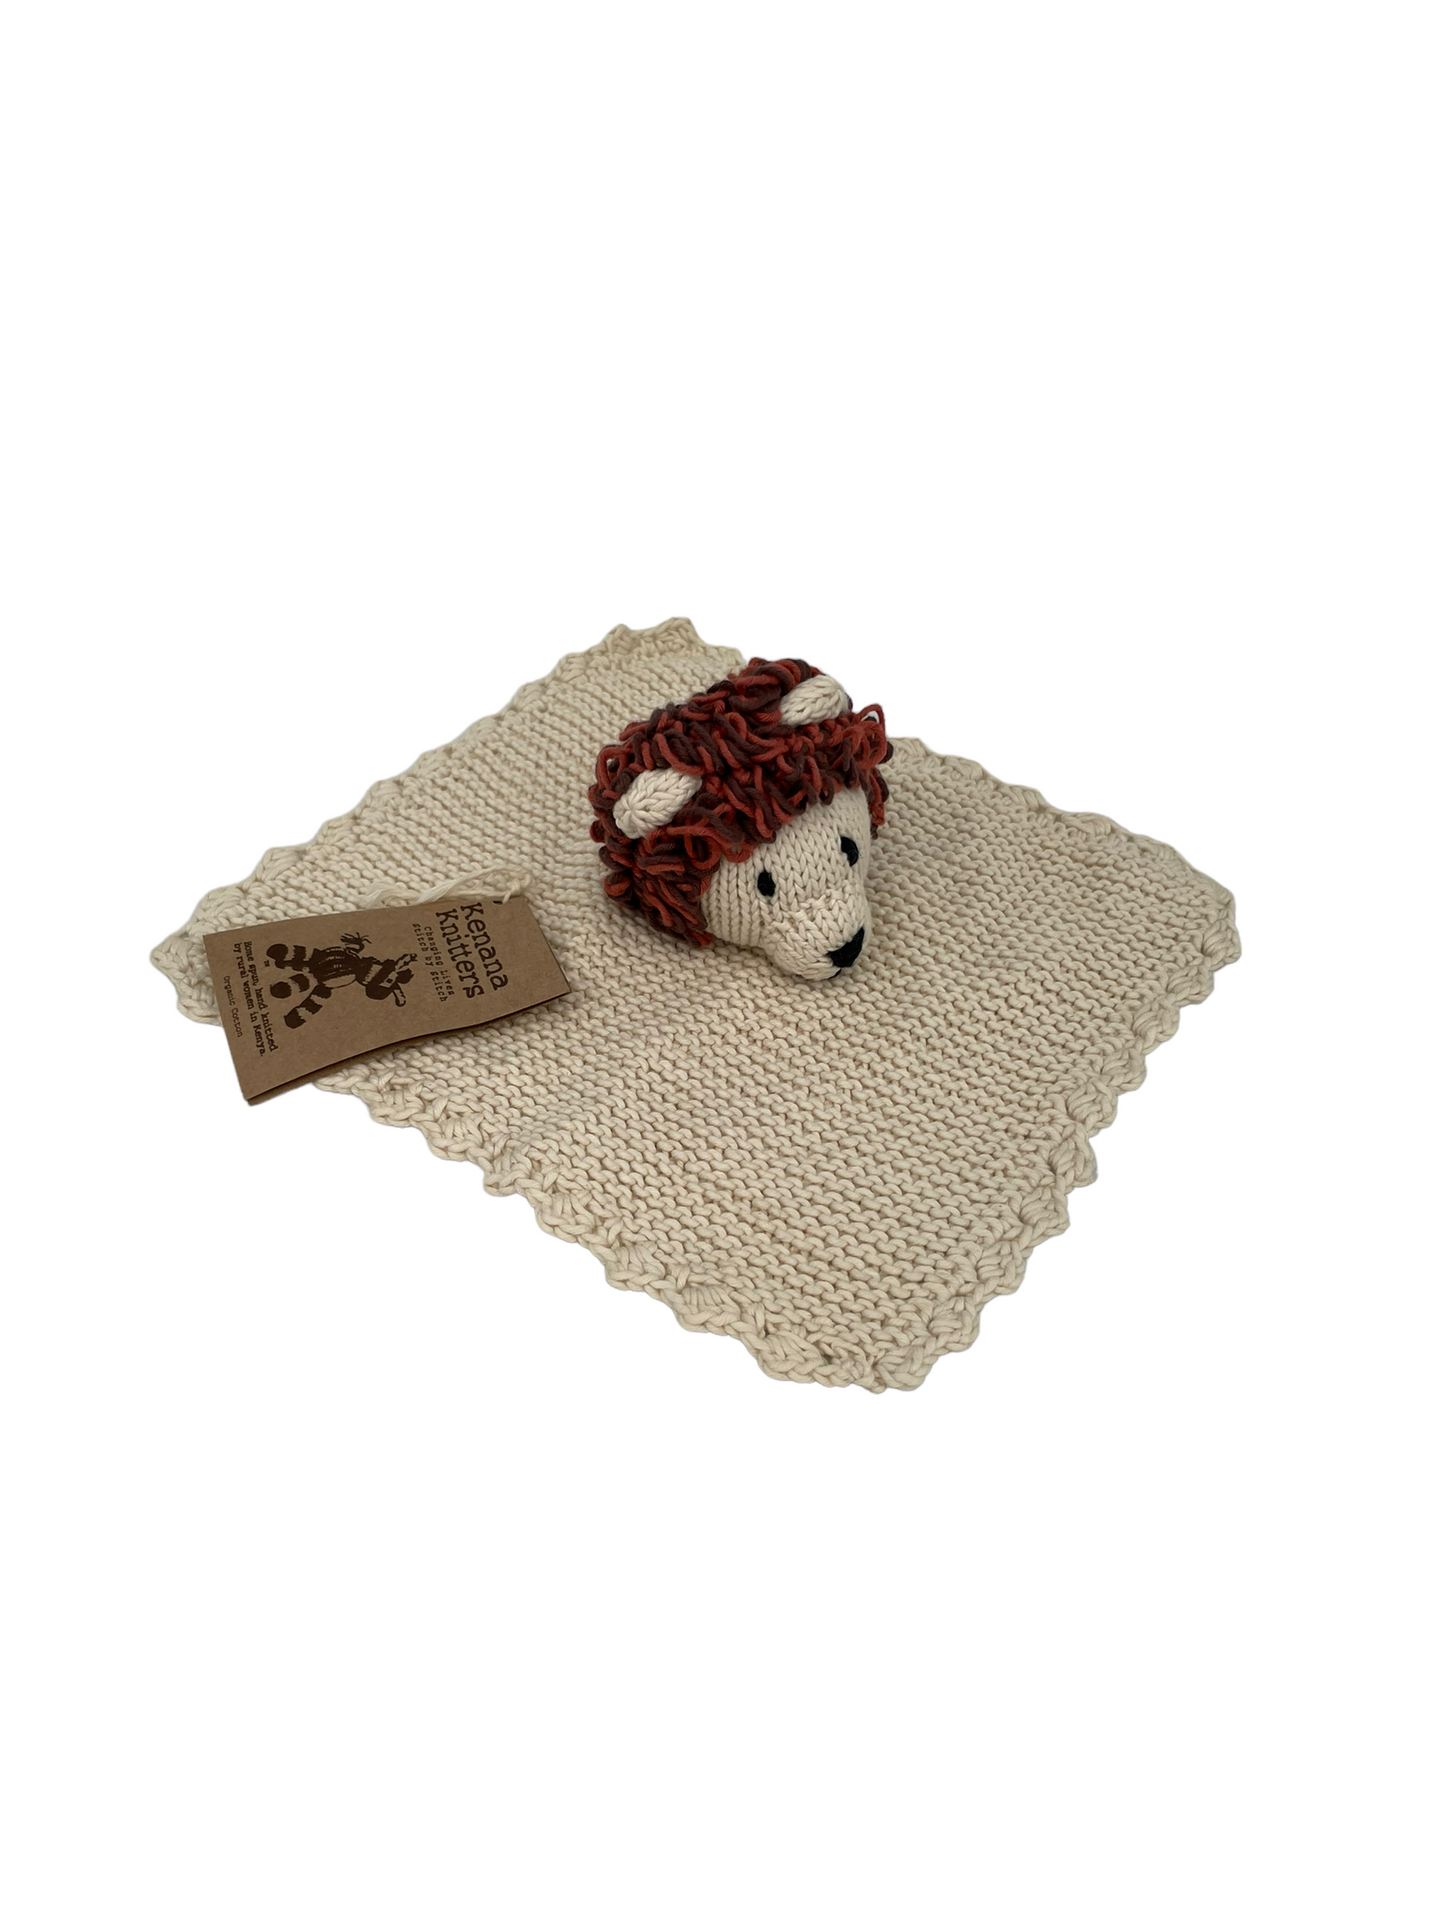 Lion flat comforter in eco-responsible organic cotton certified GOTS - LEONARD - Kenana Knitters